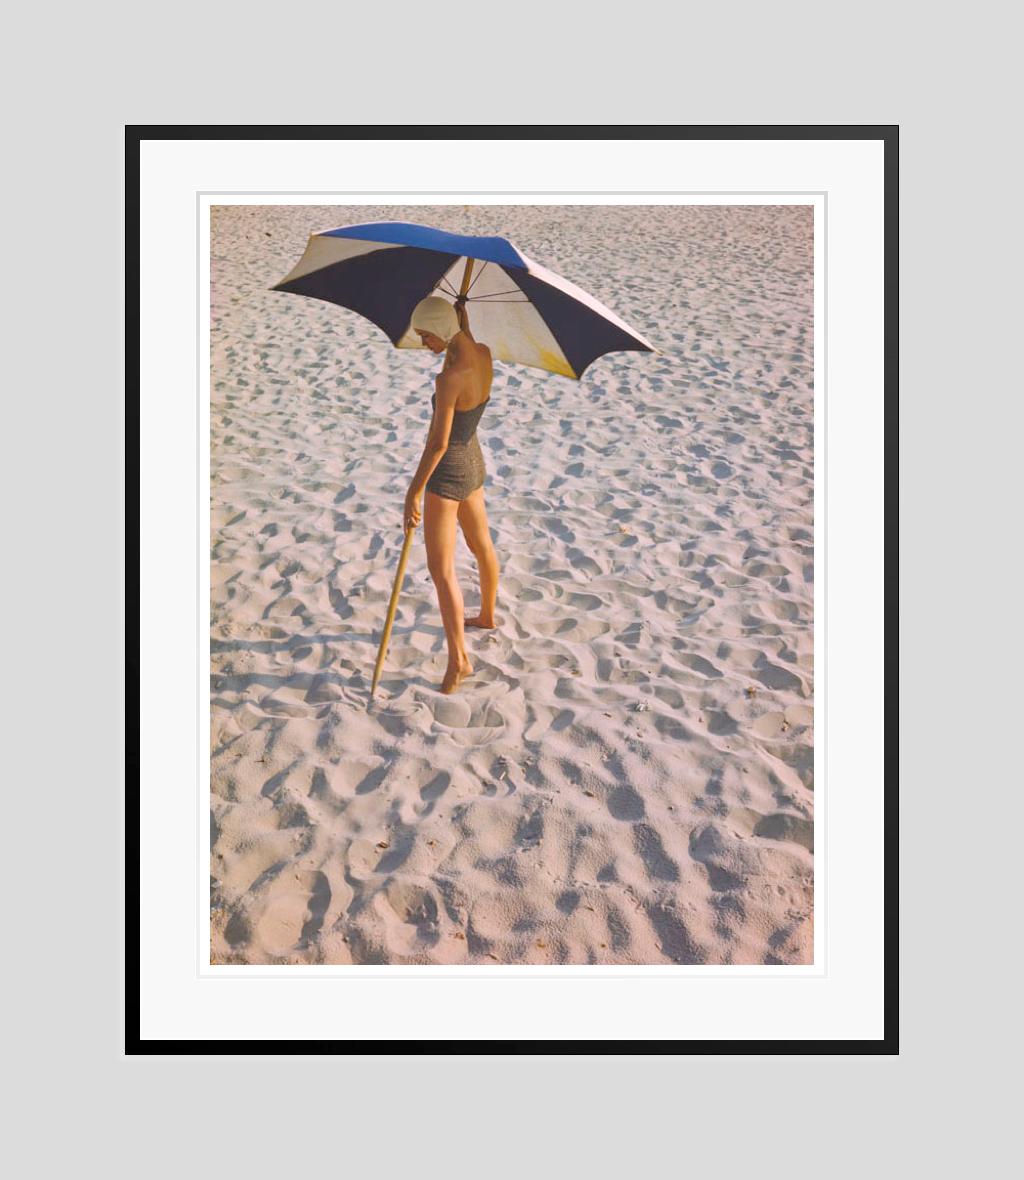 Girl On The Beach 

1948

Beachwear fashion shoot featuring sunshades

by Toni Frissell

40 x 30